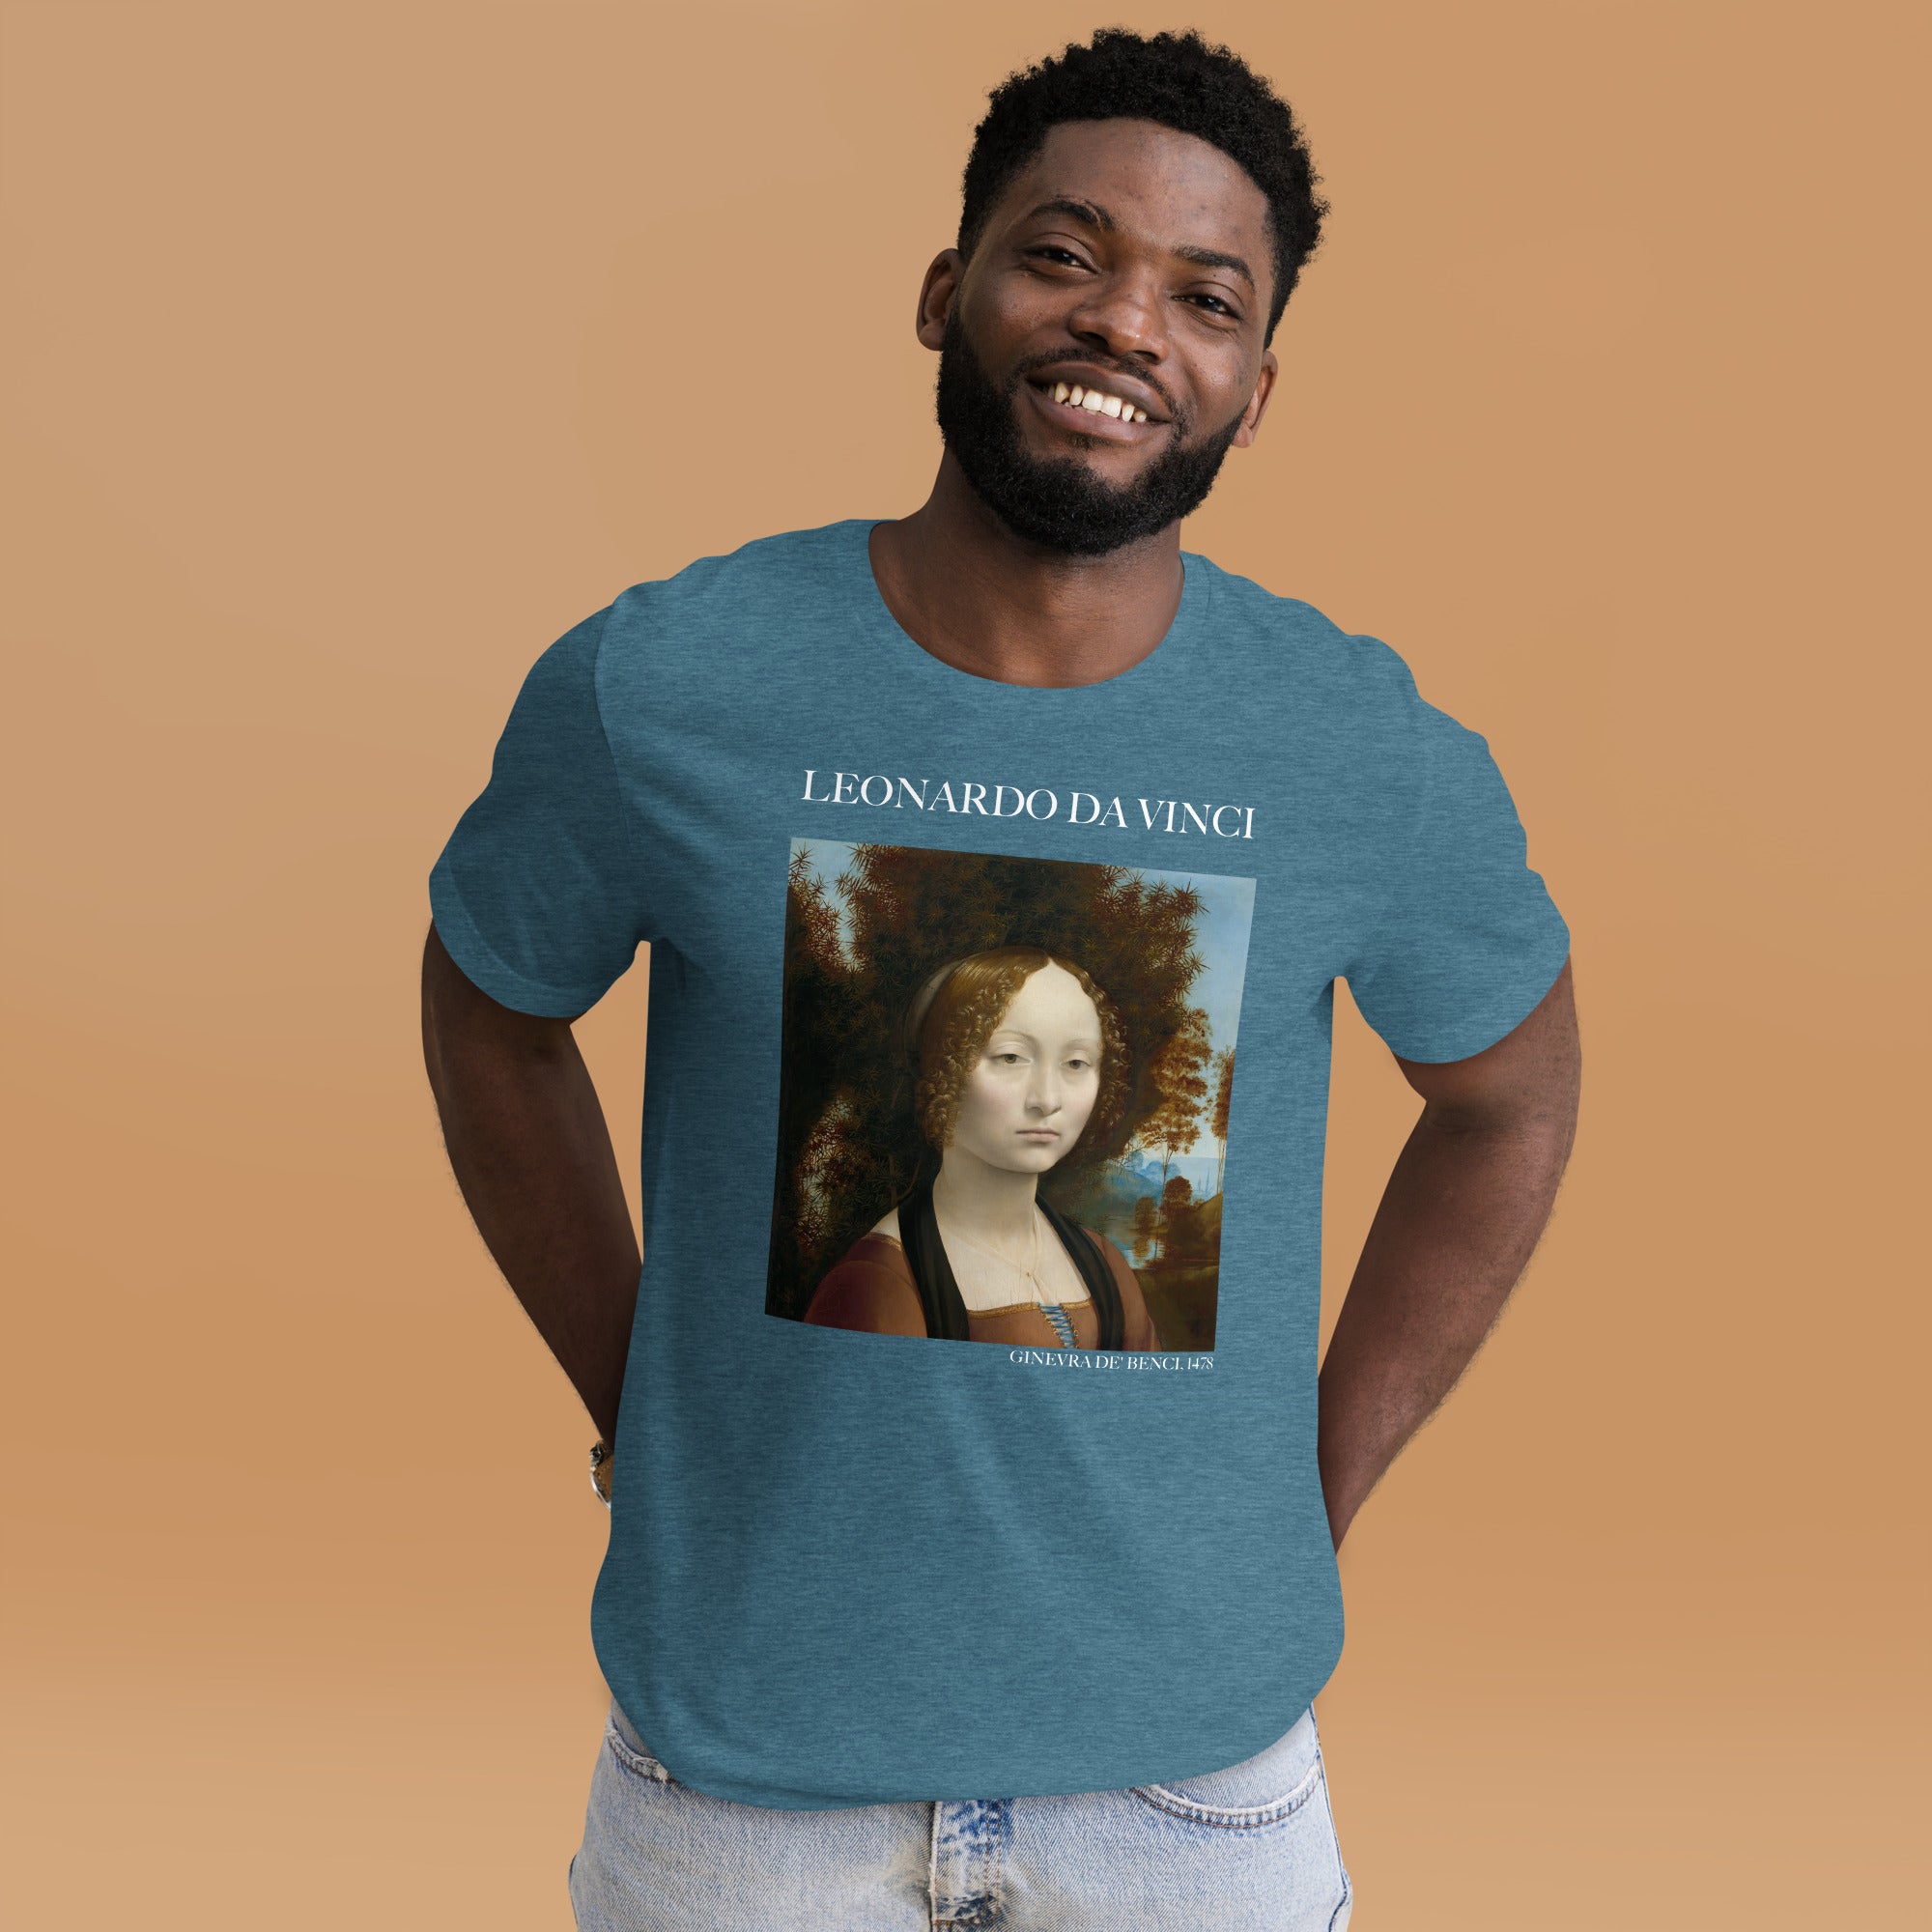 Leonardo da Vinci 'Ginevra de' Benci' Berühmtes Gemälde T-Shirt | Unisex Klassisches Kunst-T-Shirt